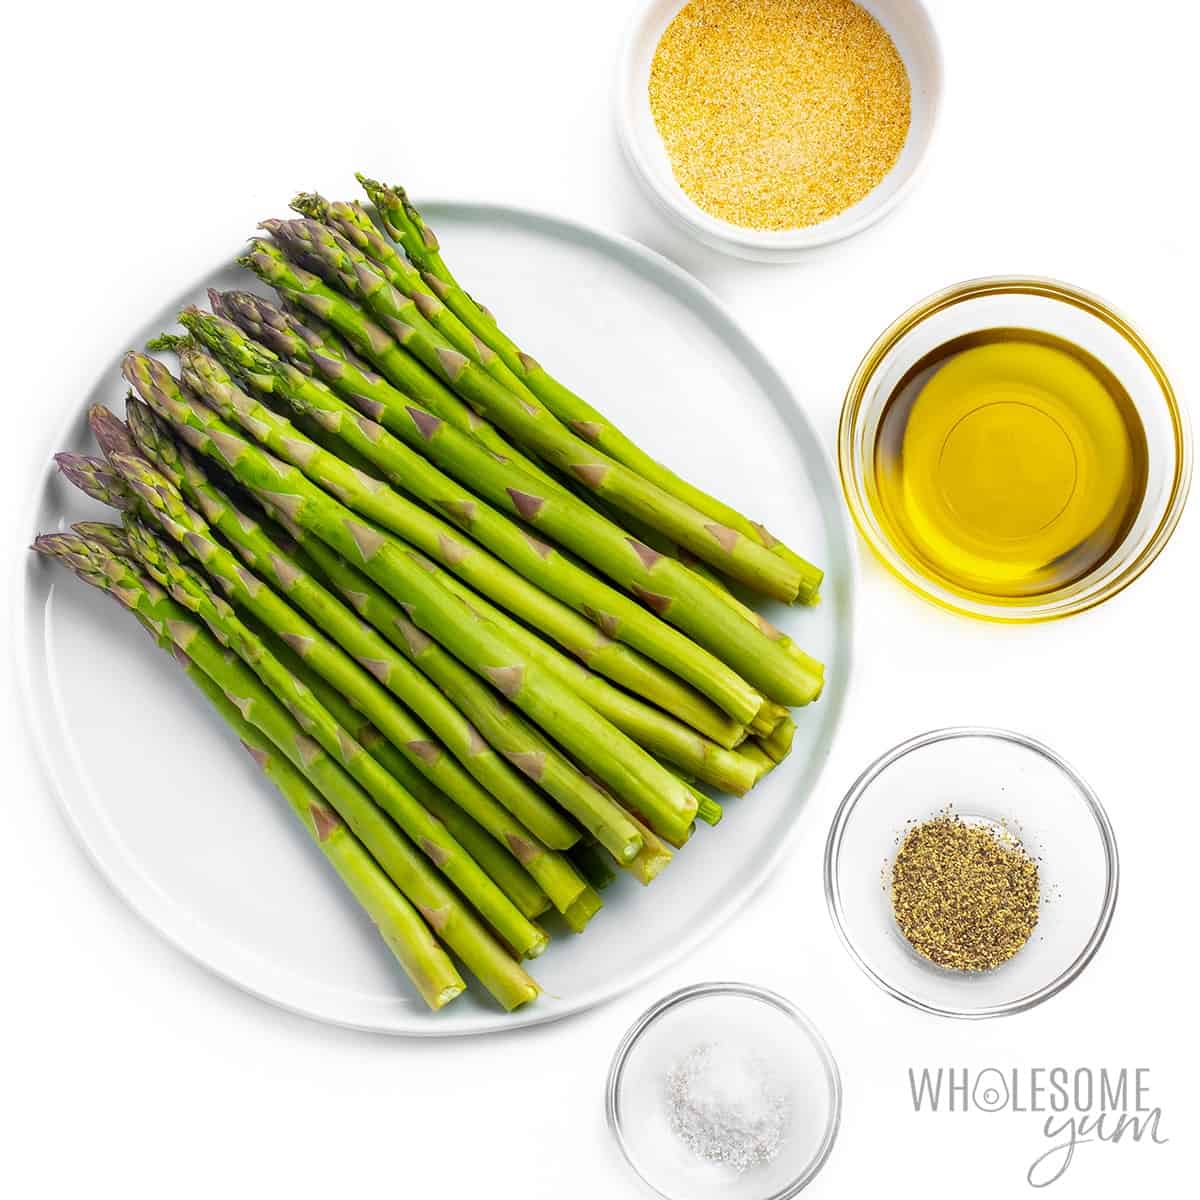 Ingredients for roasting asparagus.